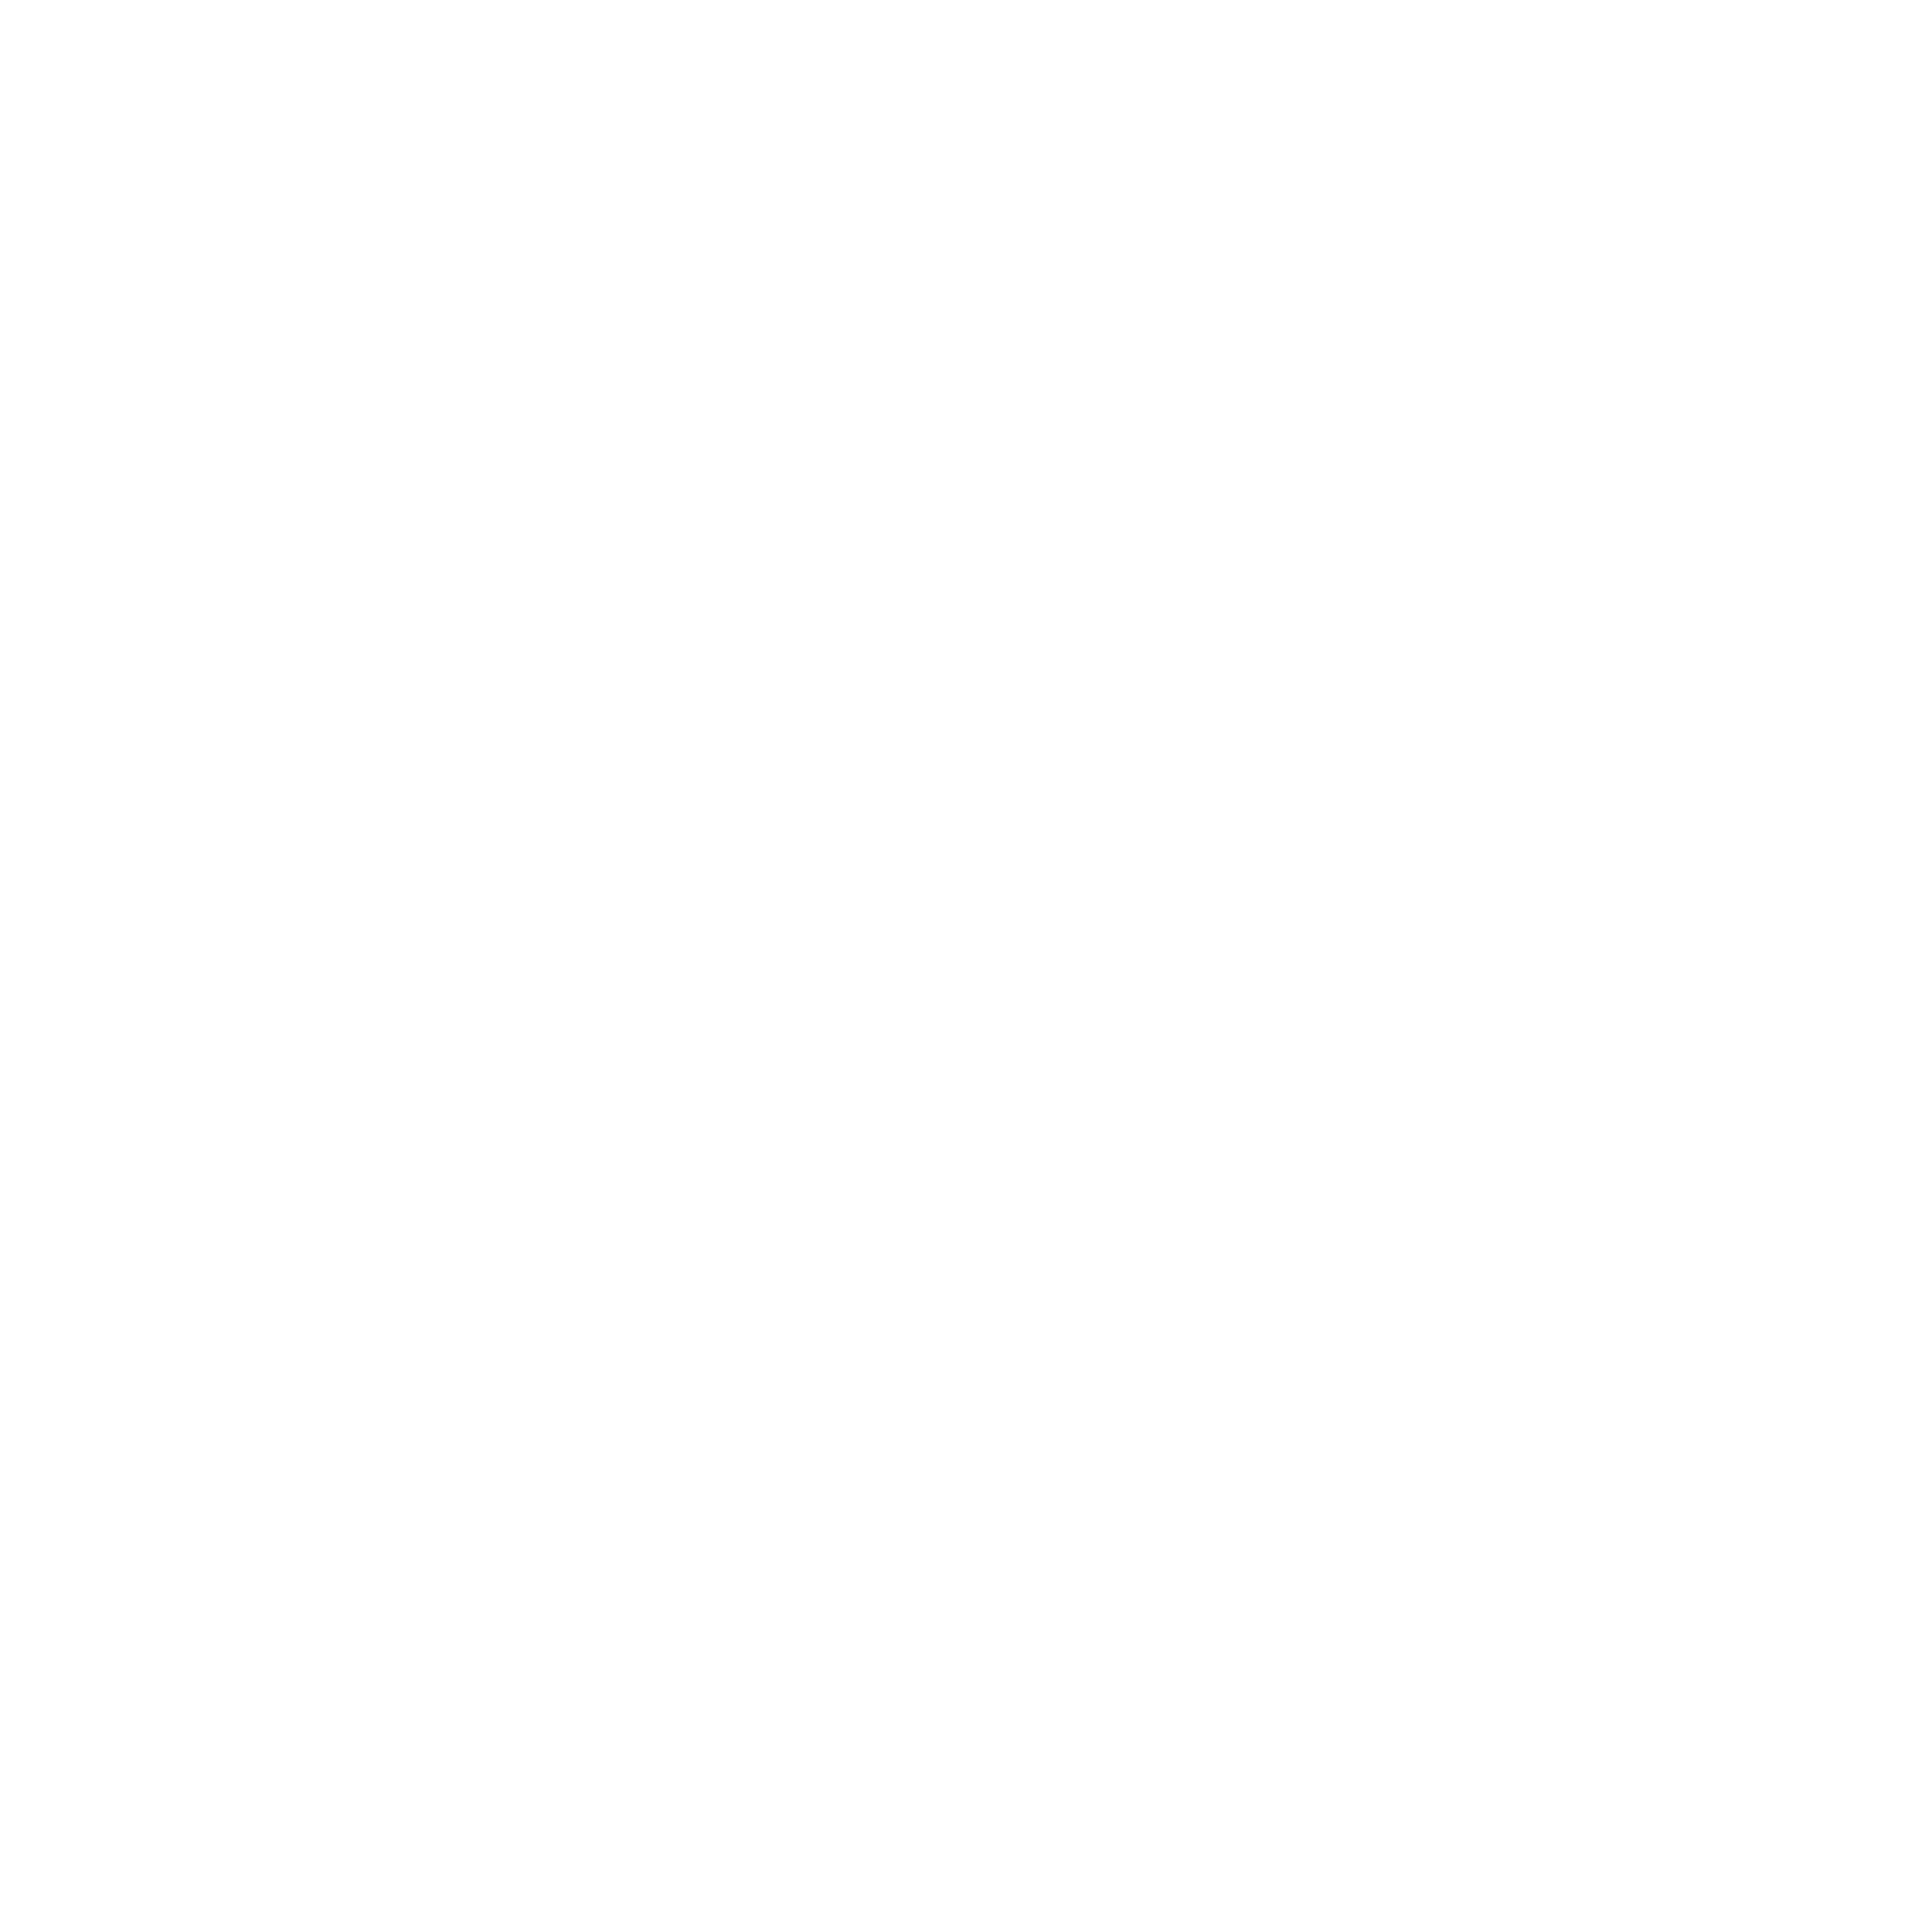 Bysic Design